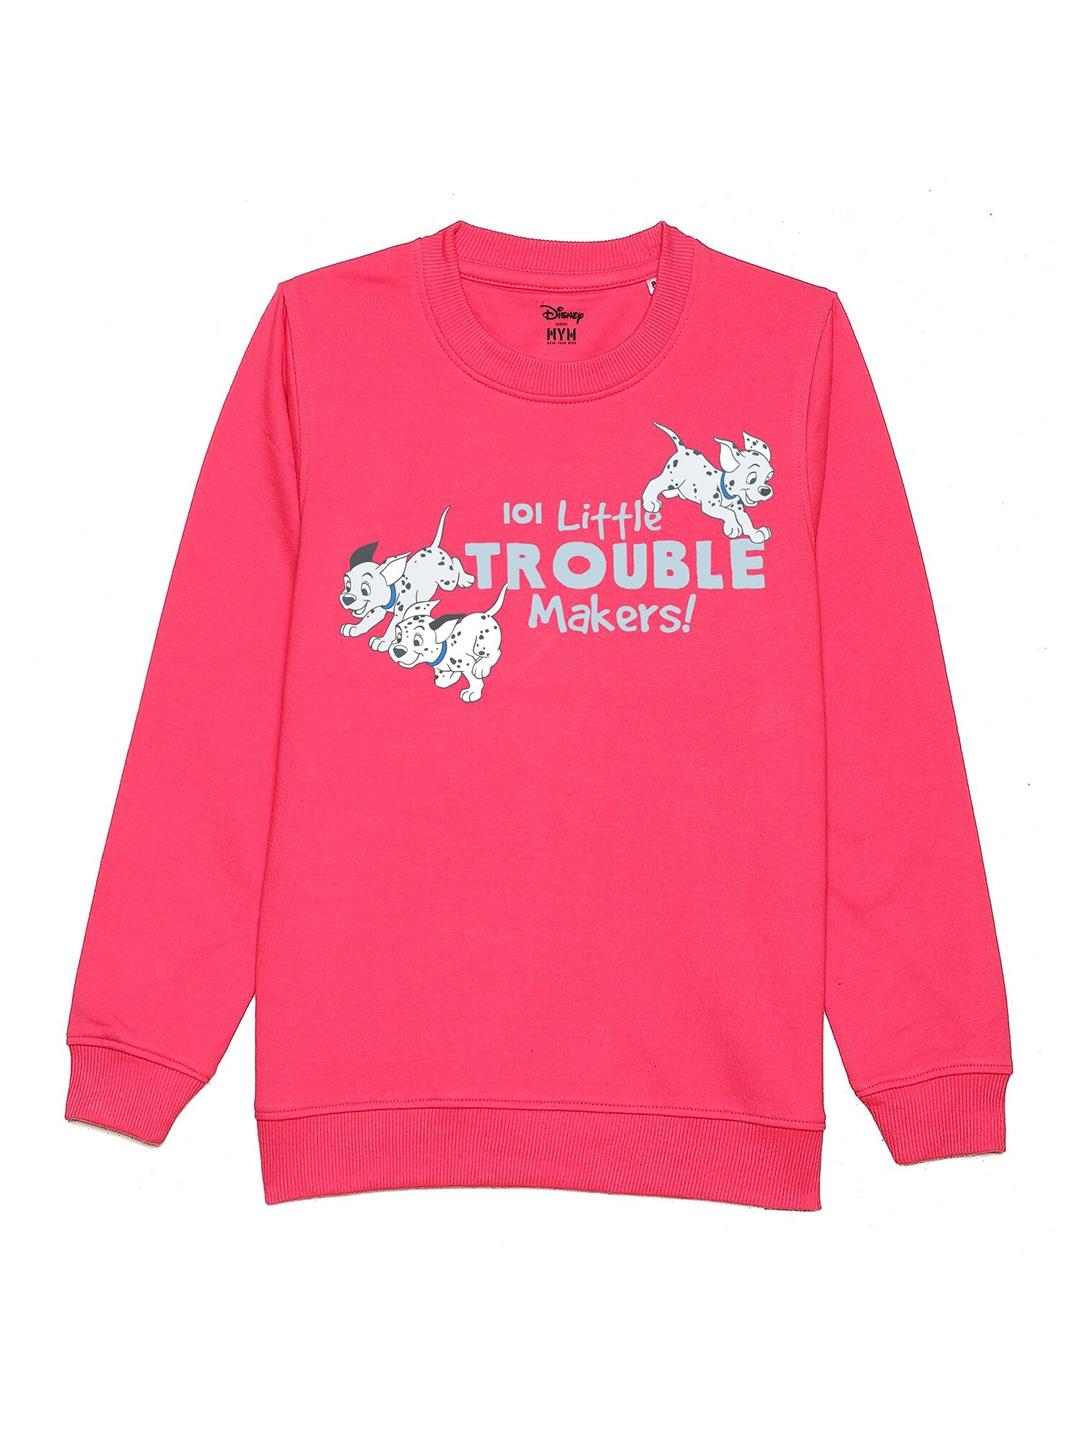 disney-by-wear-your-mind-kids-pink-printed-sweatshirt